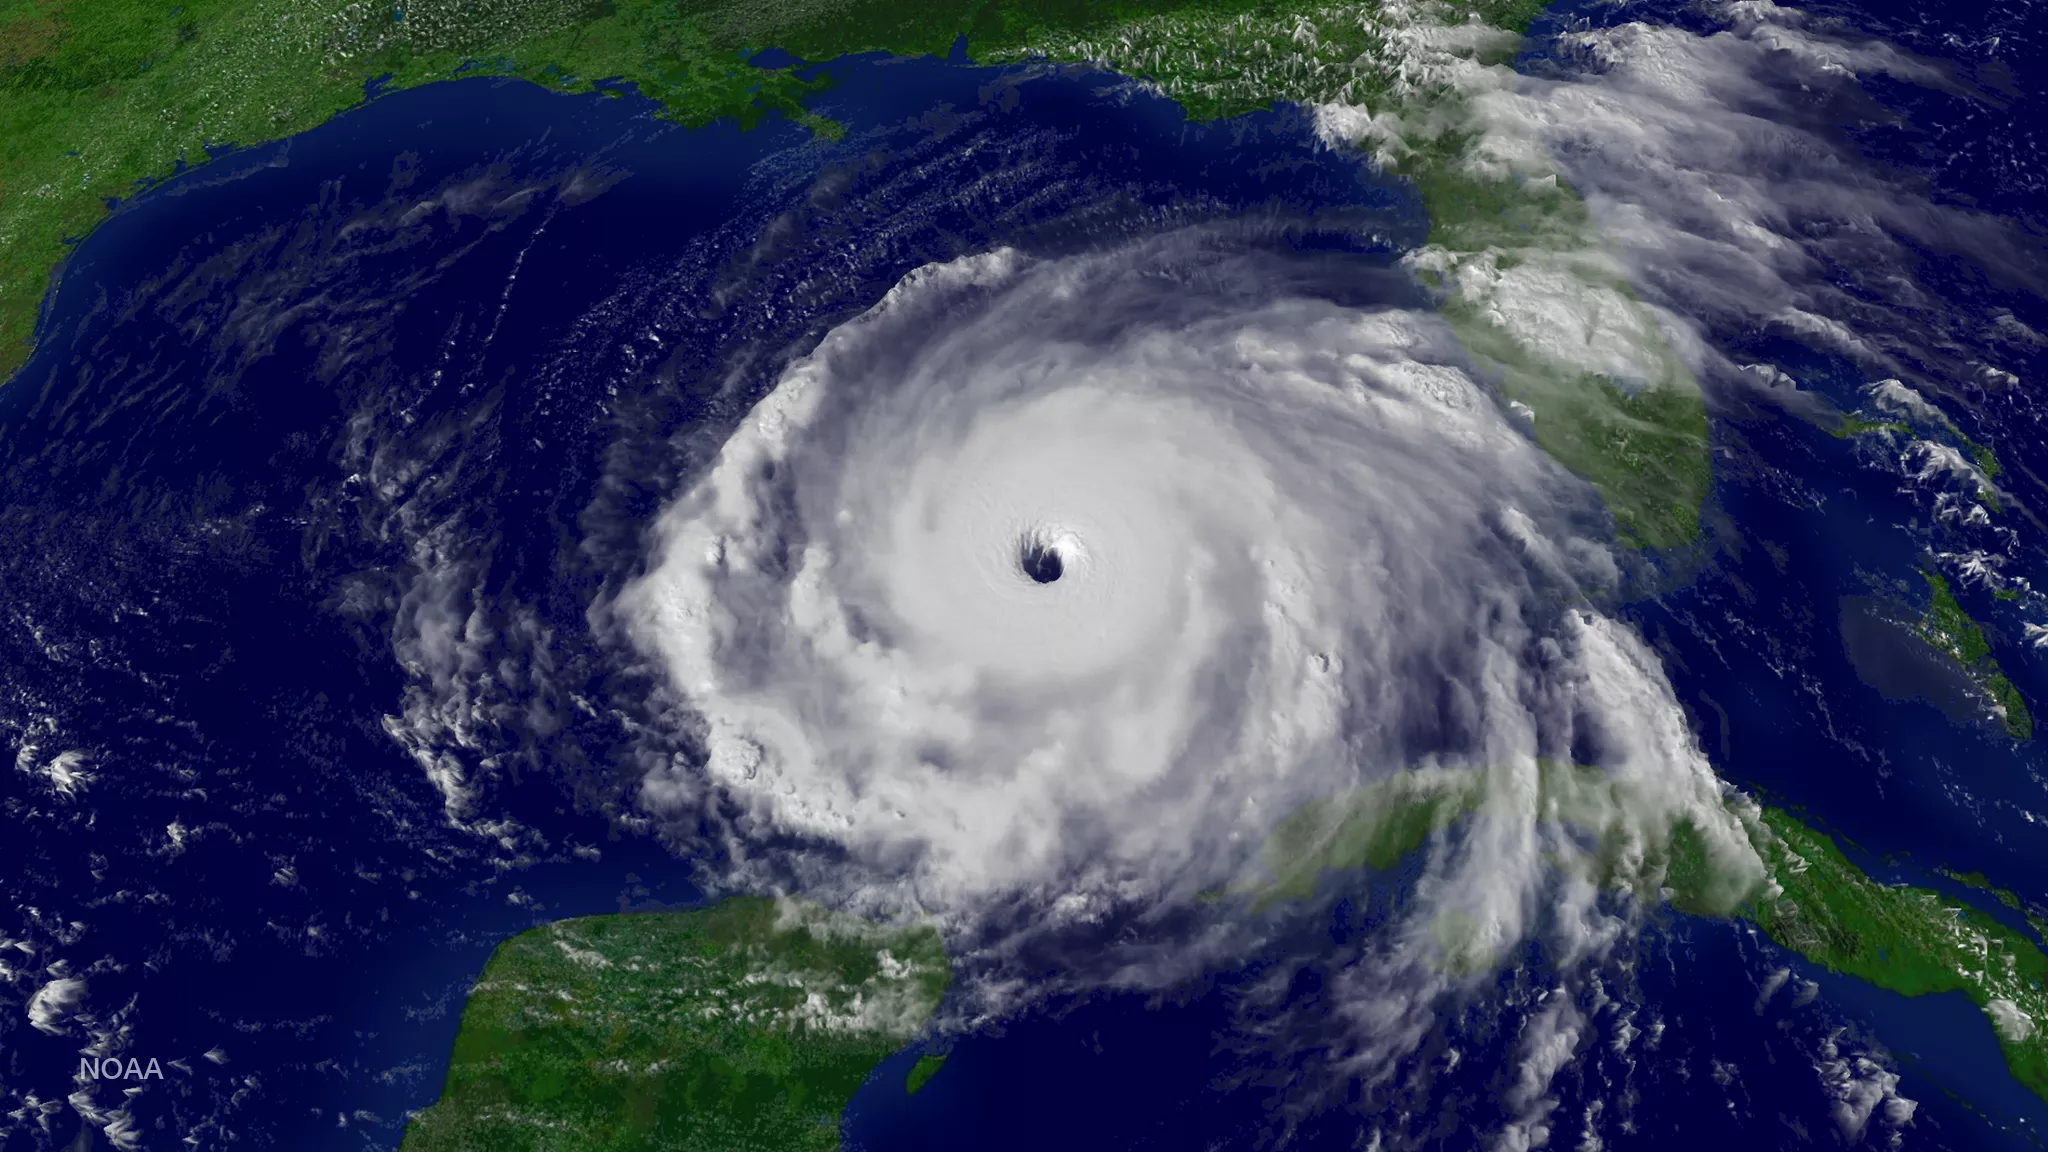 Hurricane Rita in the Gulf of Mexico, September 21, 2005